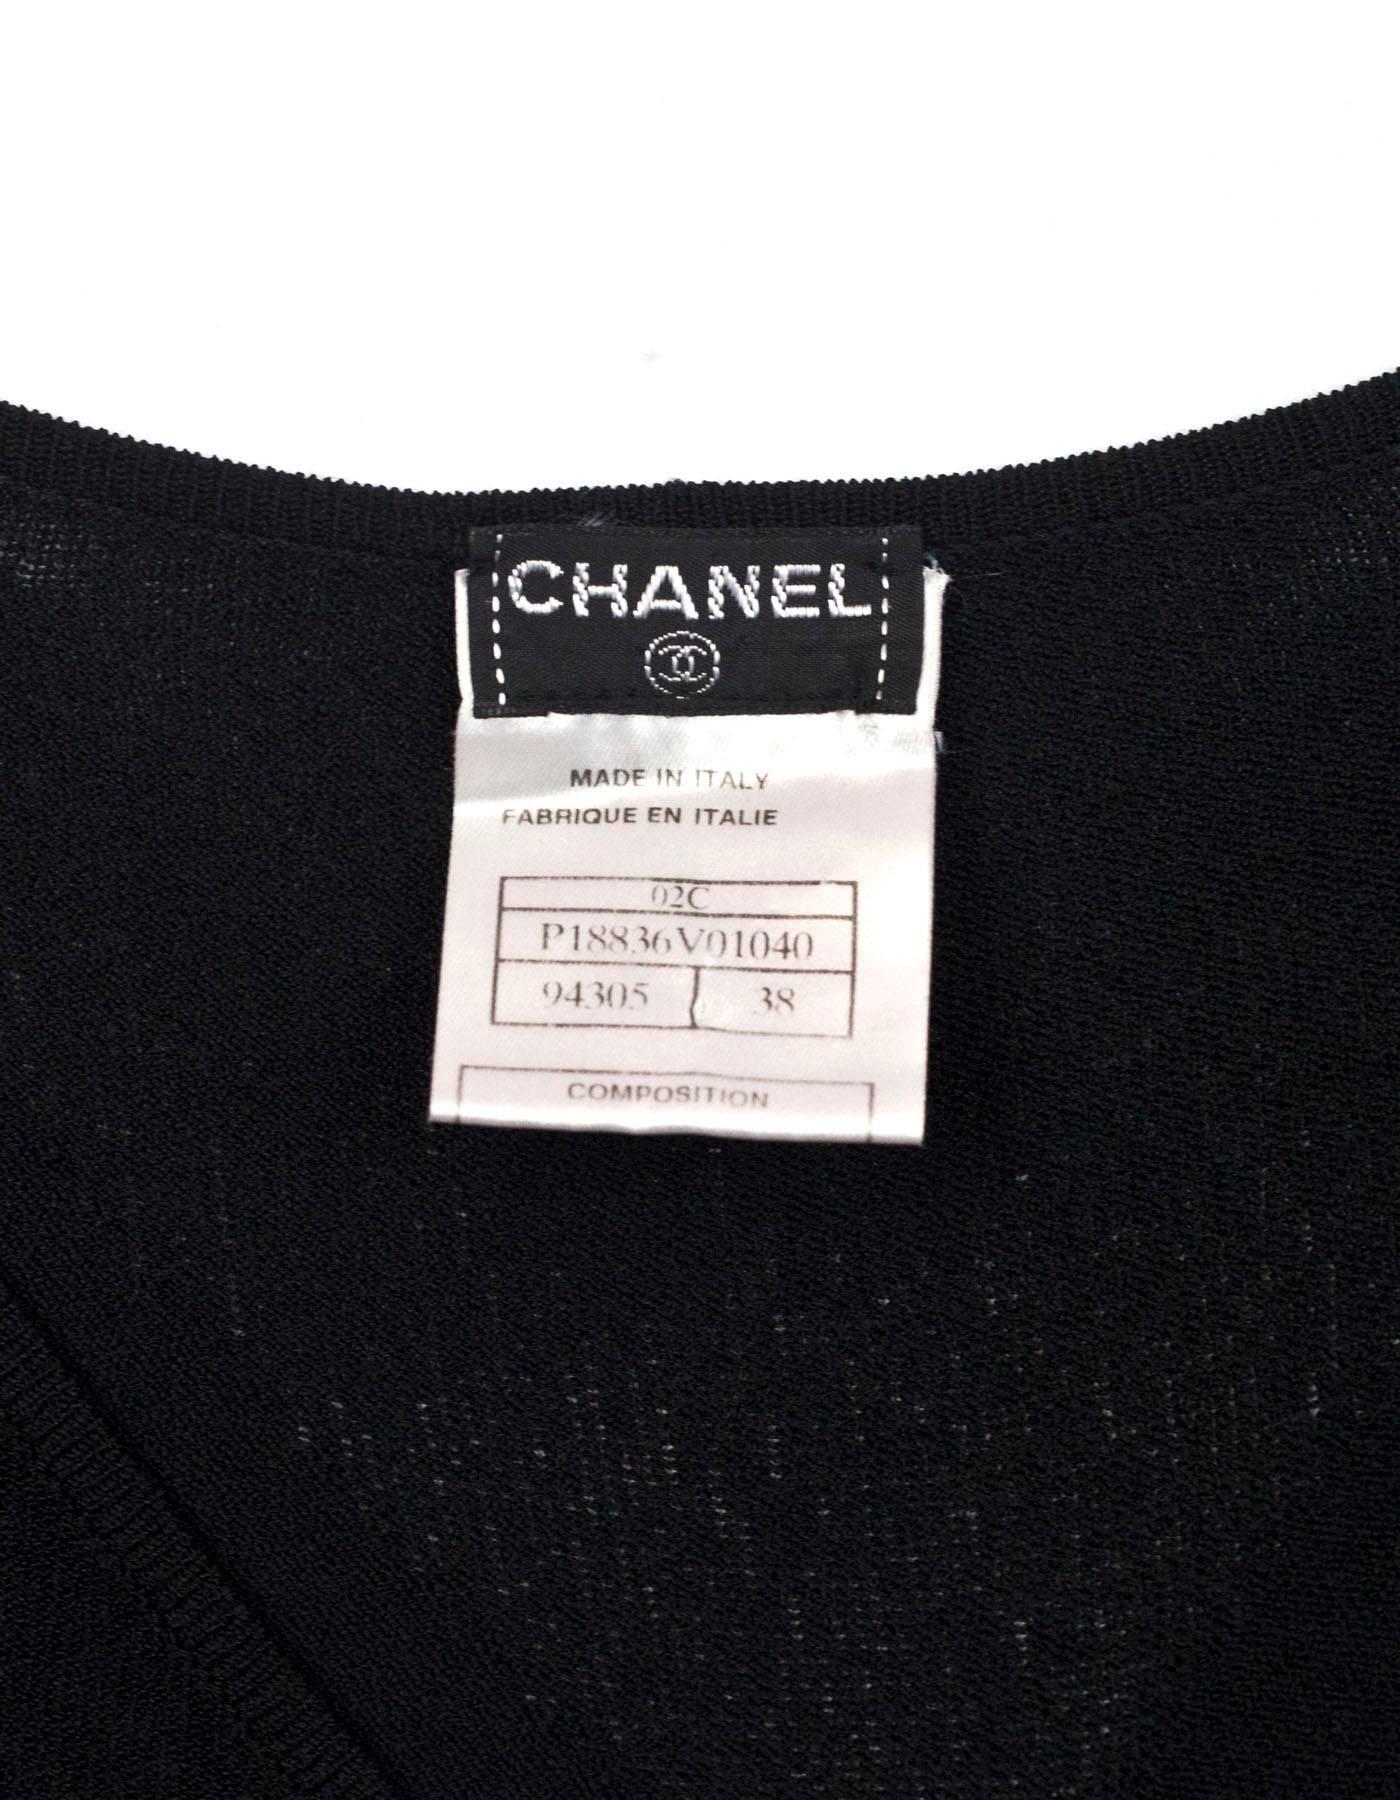 Chanel 2002 Black Top Sz FR38 1